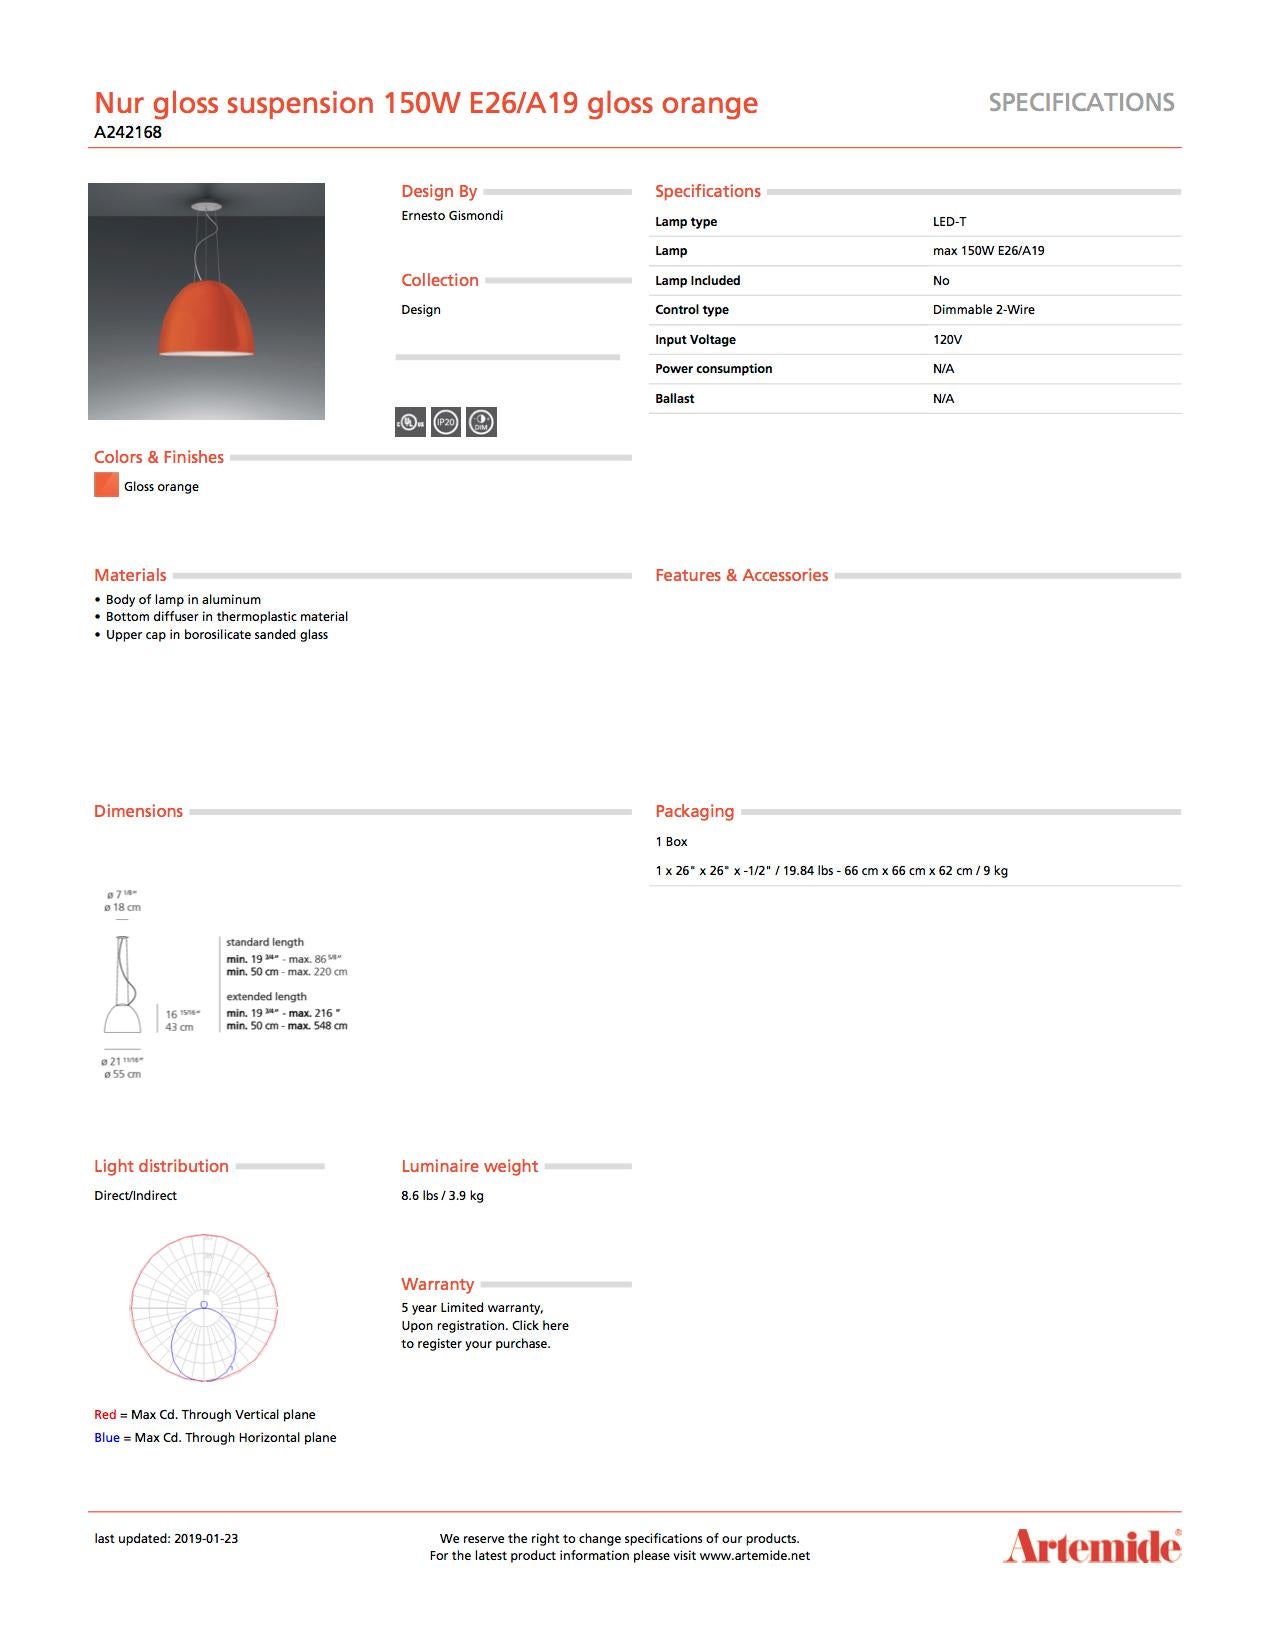 Modern Artemide Nur 150W E26/A19 Suspension Light in Glossy Orange For Sale